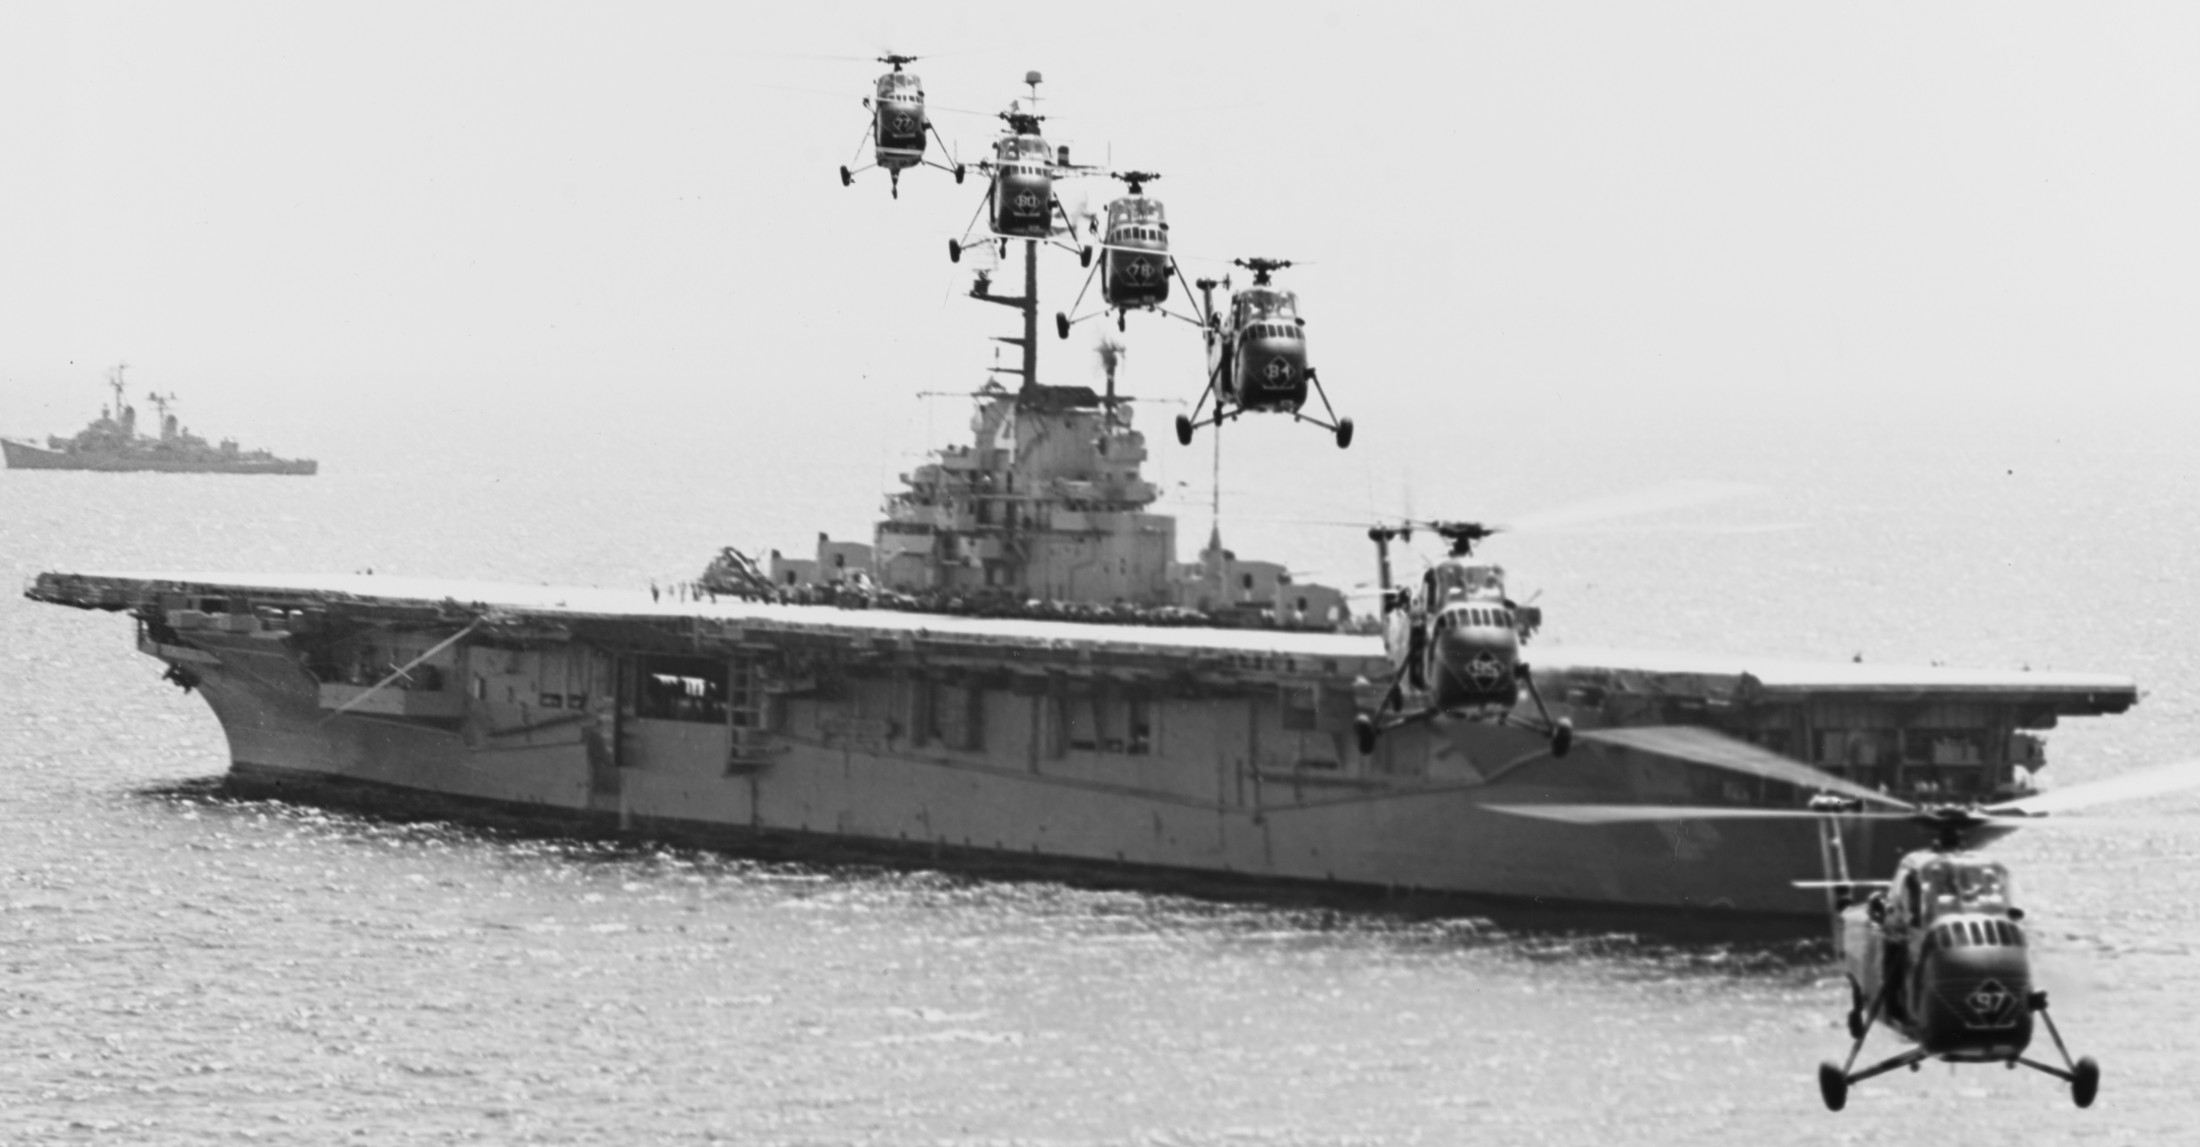 lph-4 uss boxer landing platform helicopter amphibious assault ship us navy 44